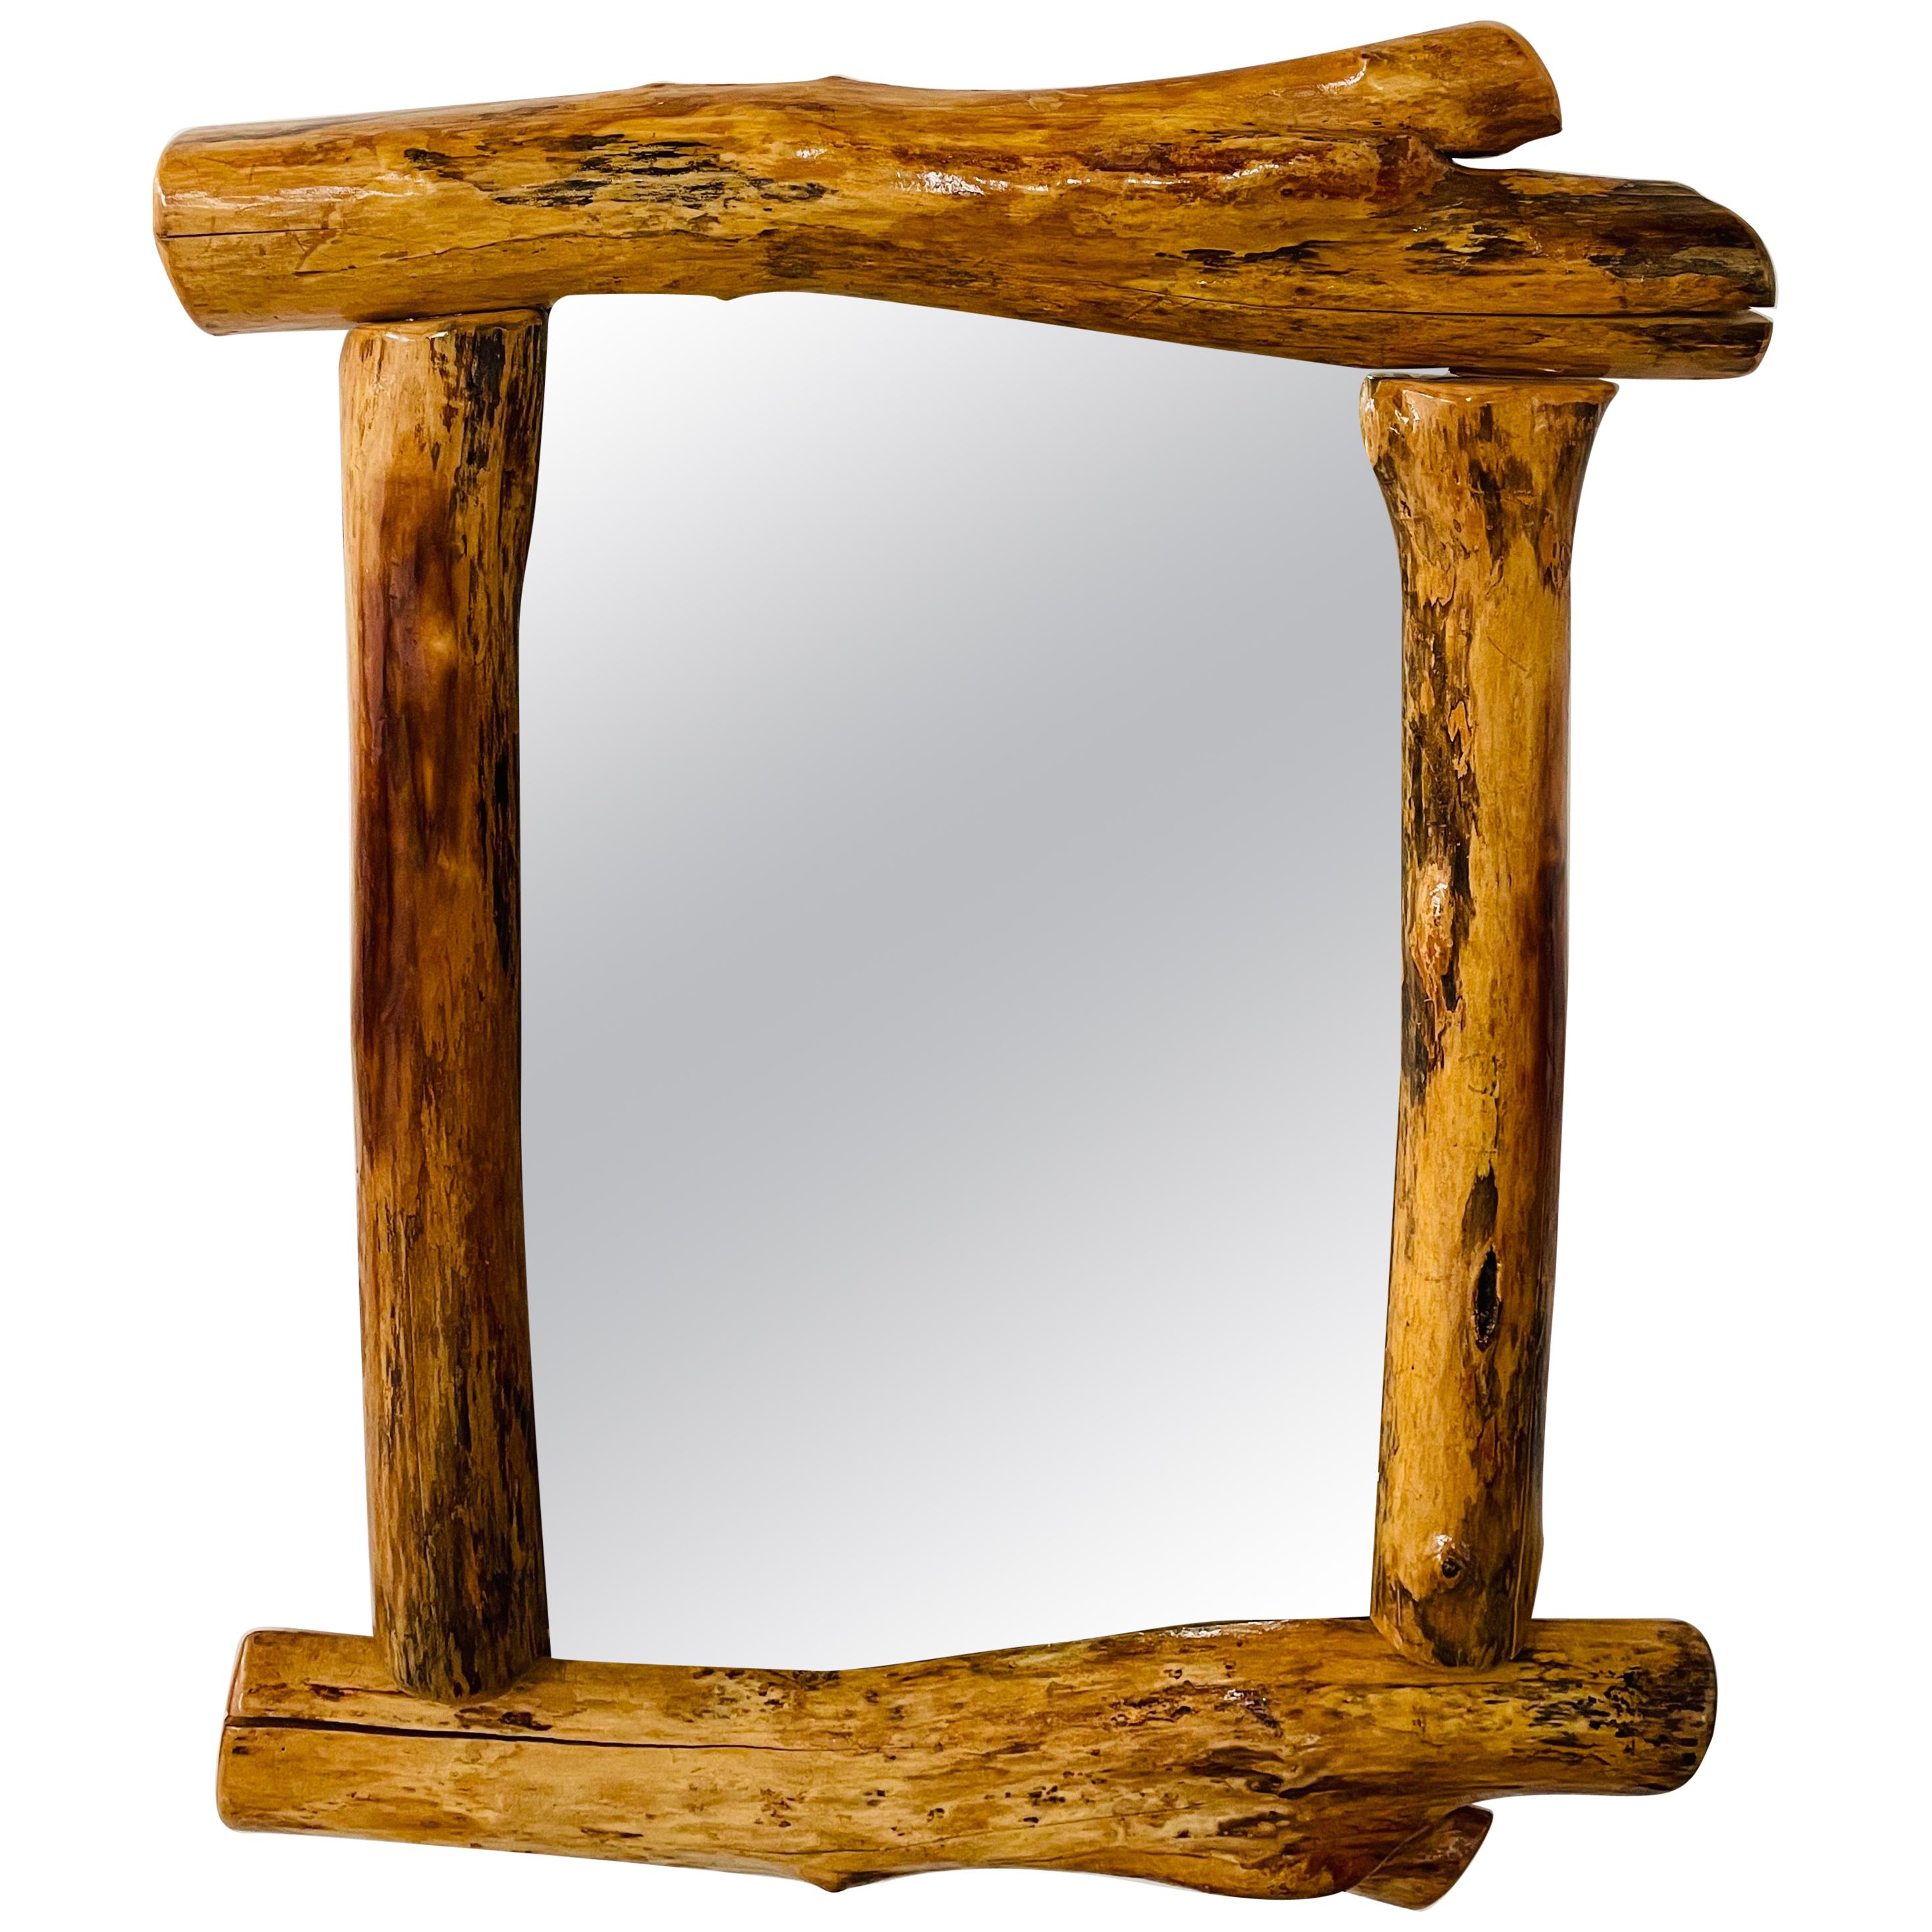 Organic Modern Design Maple Wood Framed Wall or Mantel Mirror For Sale